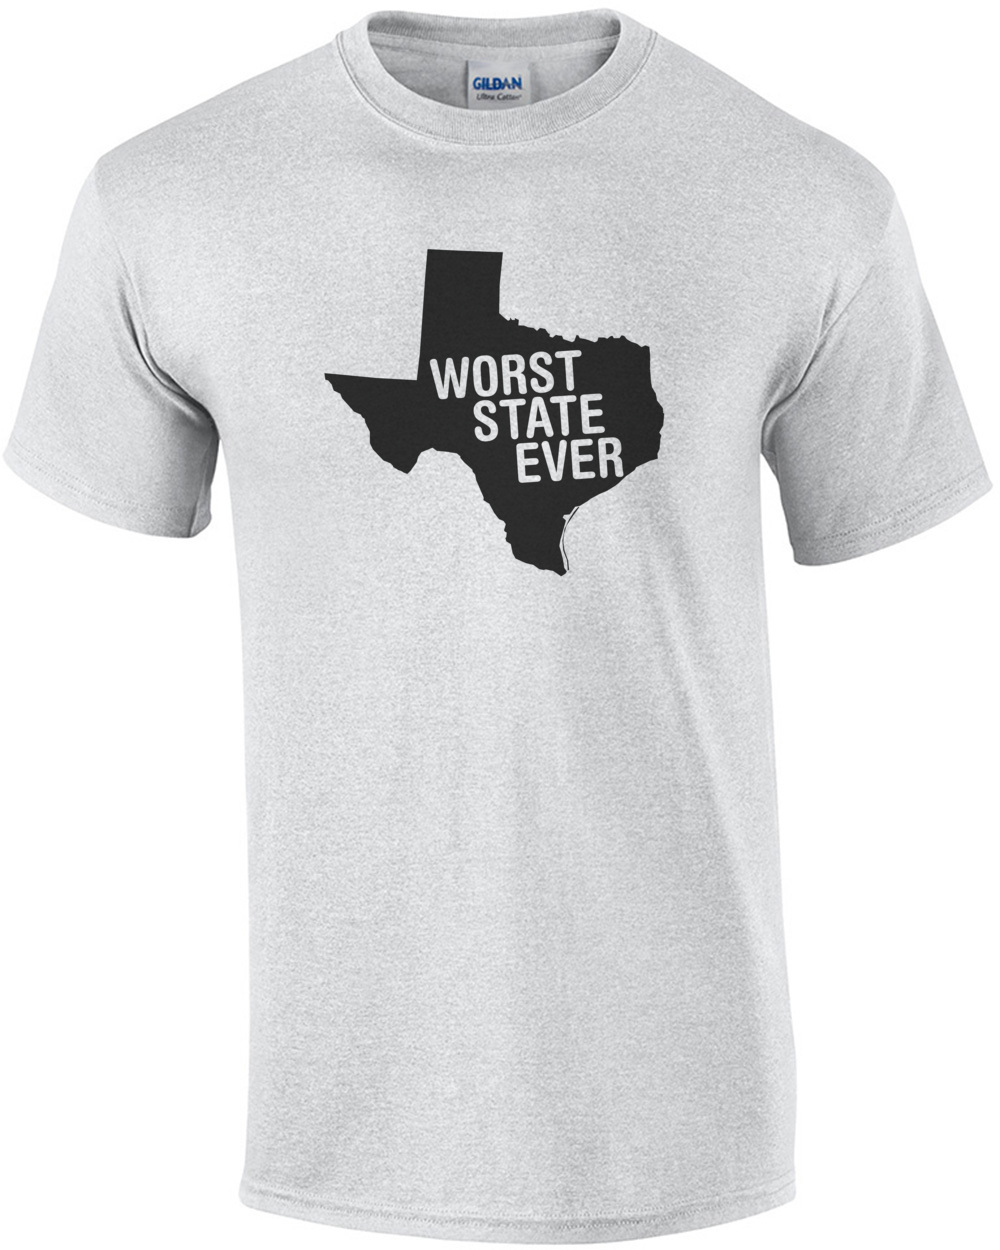 Texas Worst State Ever - Funny Texas T-Shirt | eBay